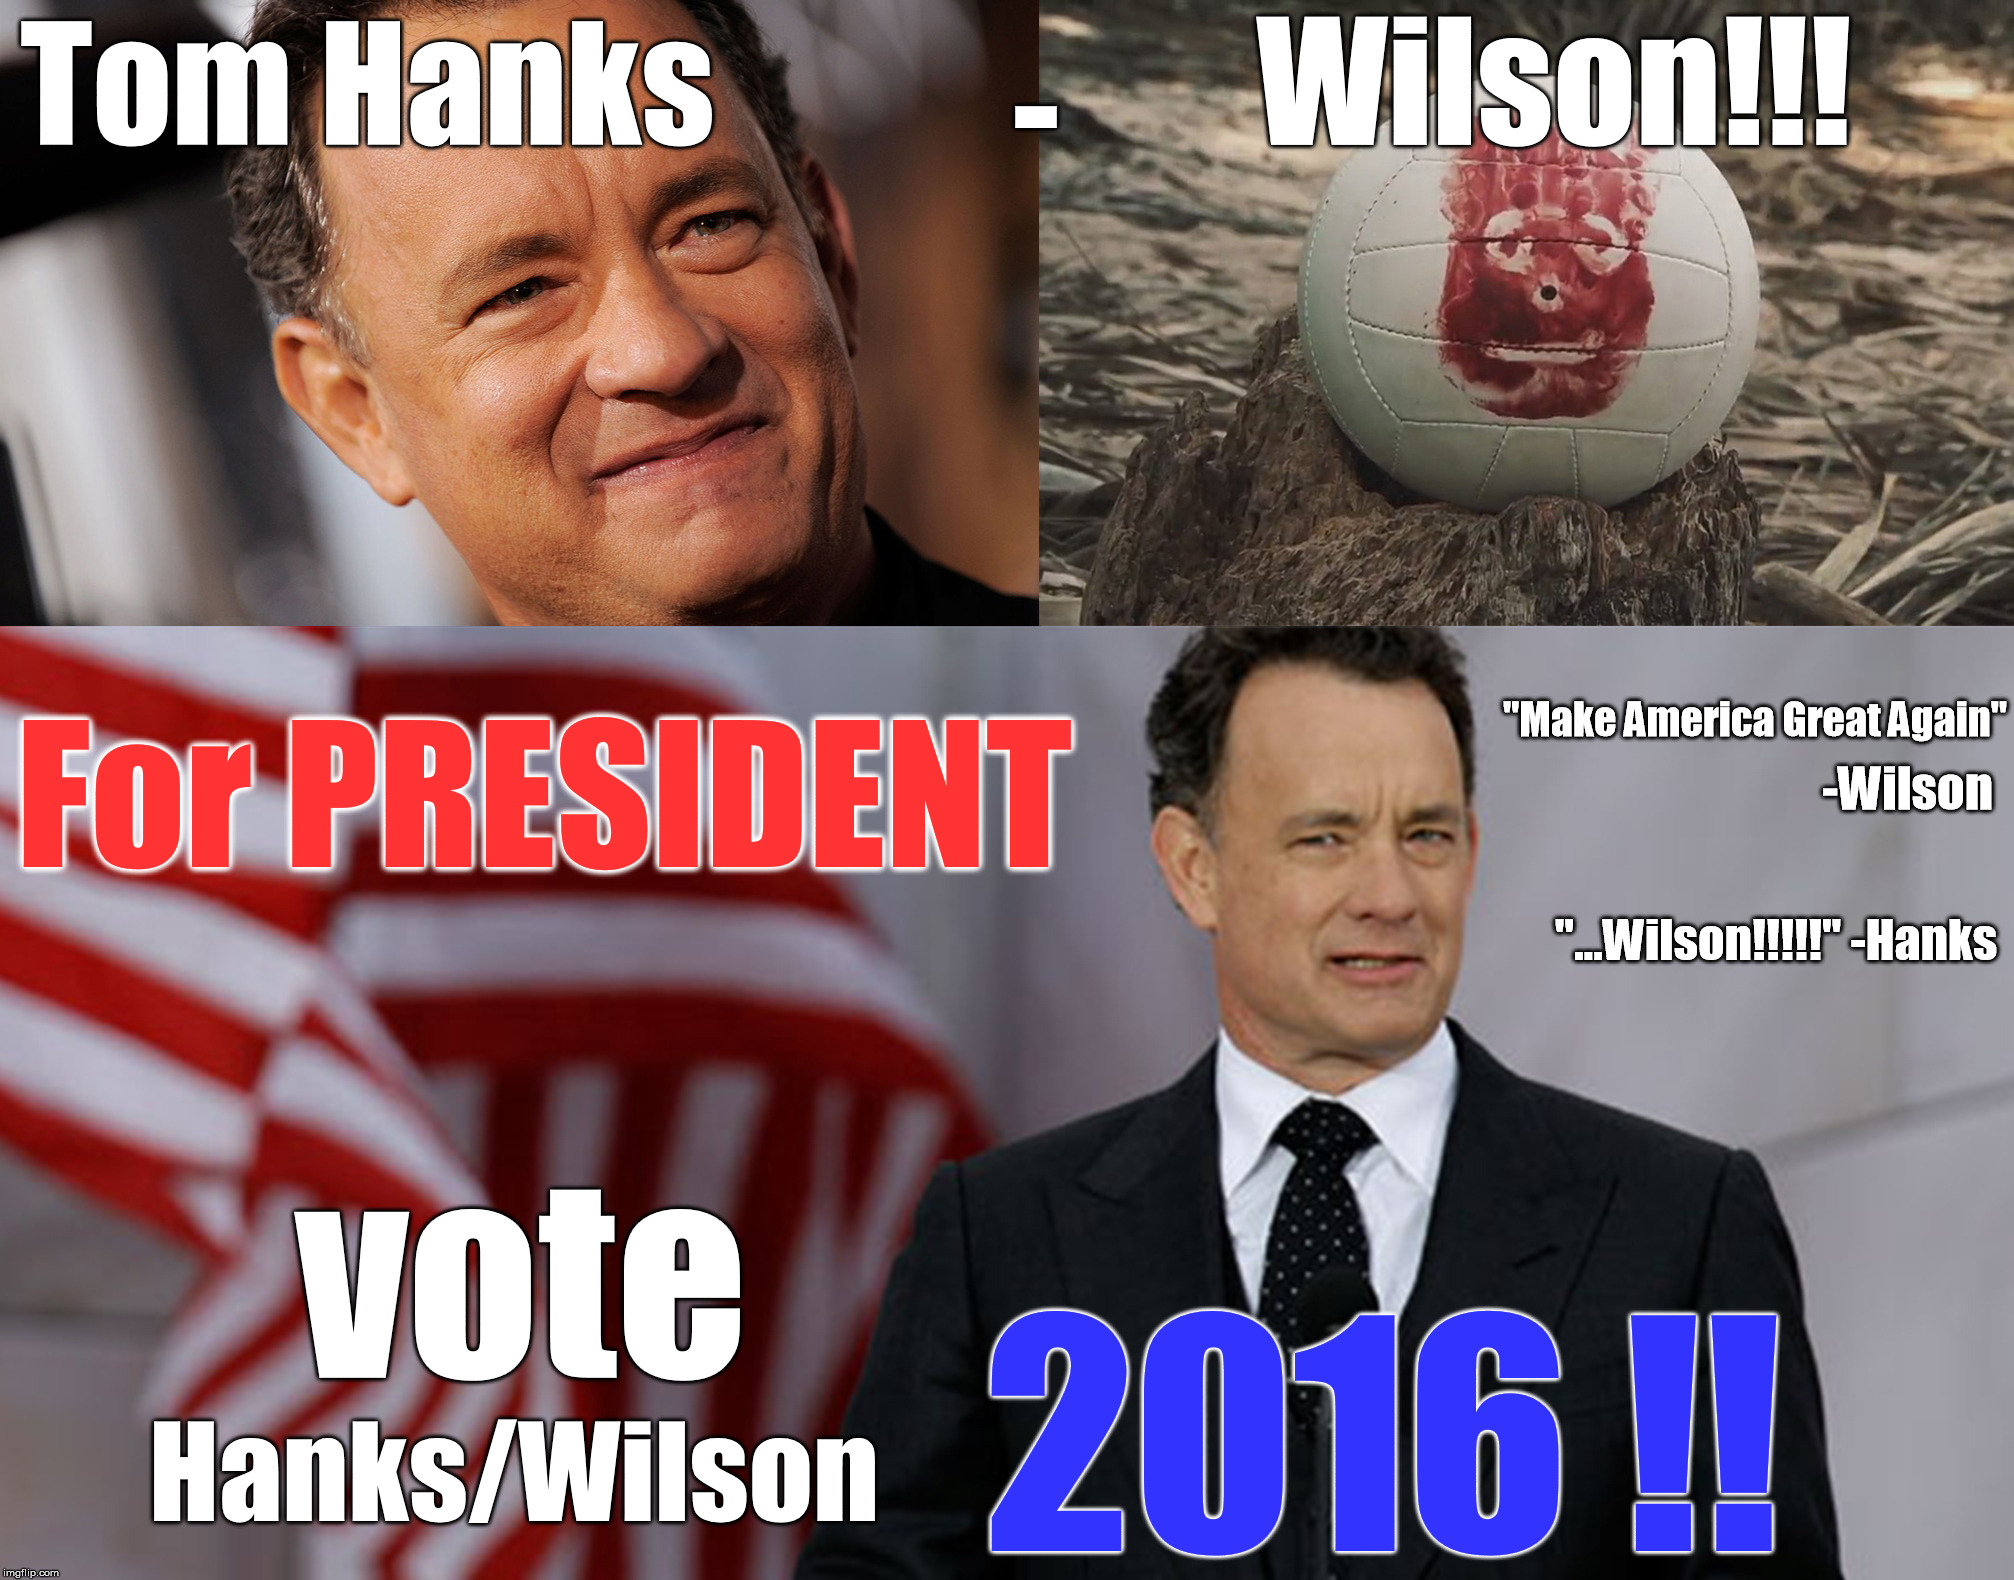 Hanks/Wilson 2016 | Wilson!!! Tom Hanks; -; For PRESIDENT; "Make America Great Again"; -Wilson; "...Wilson!!!!!" -Hanks; vote; 2016 !! Hanks/Wilson | image tagged in political,political meme,celebrity,movies,election 2016,make america great again | made w/ Imgflip meme maker